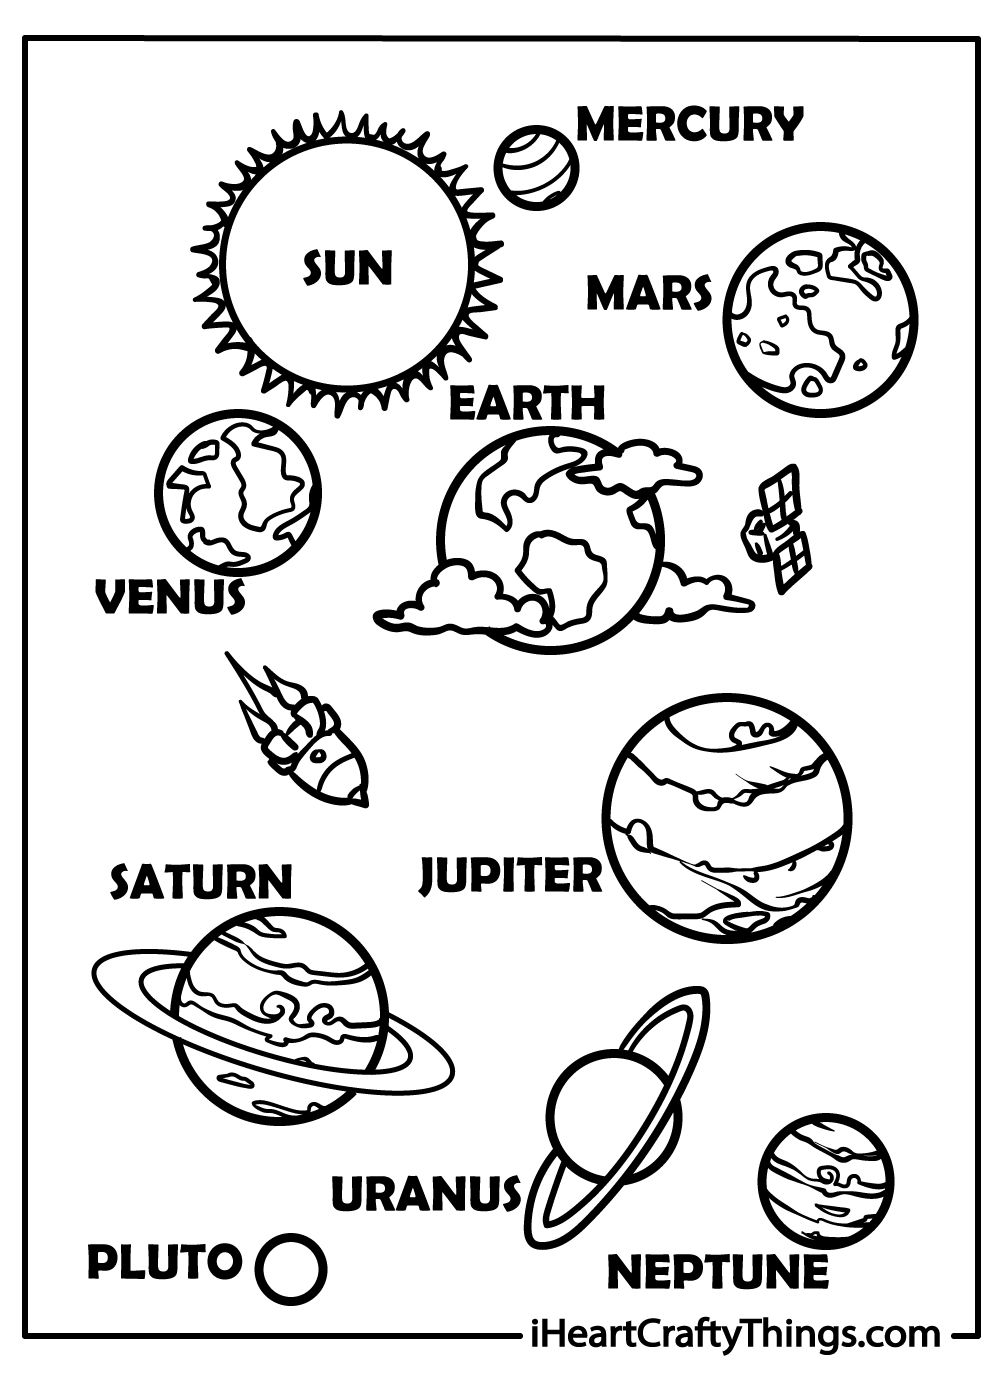 Heliosphere - Wikipedia